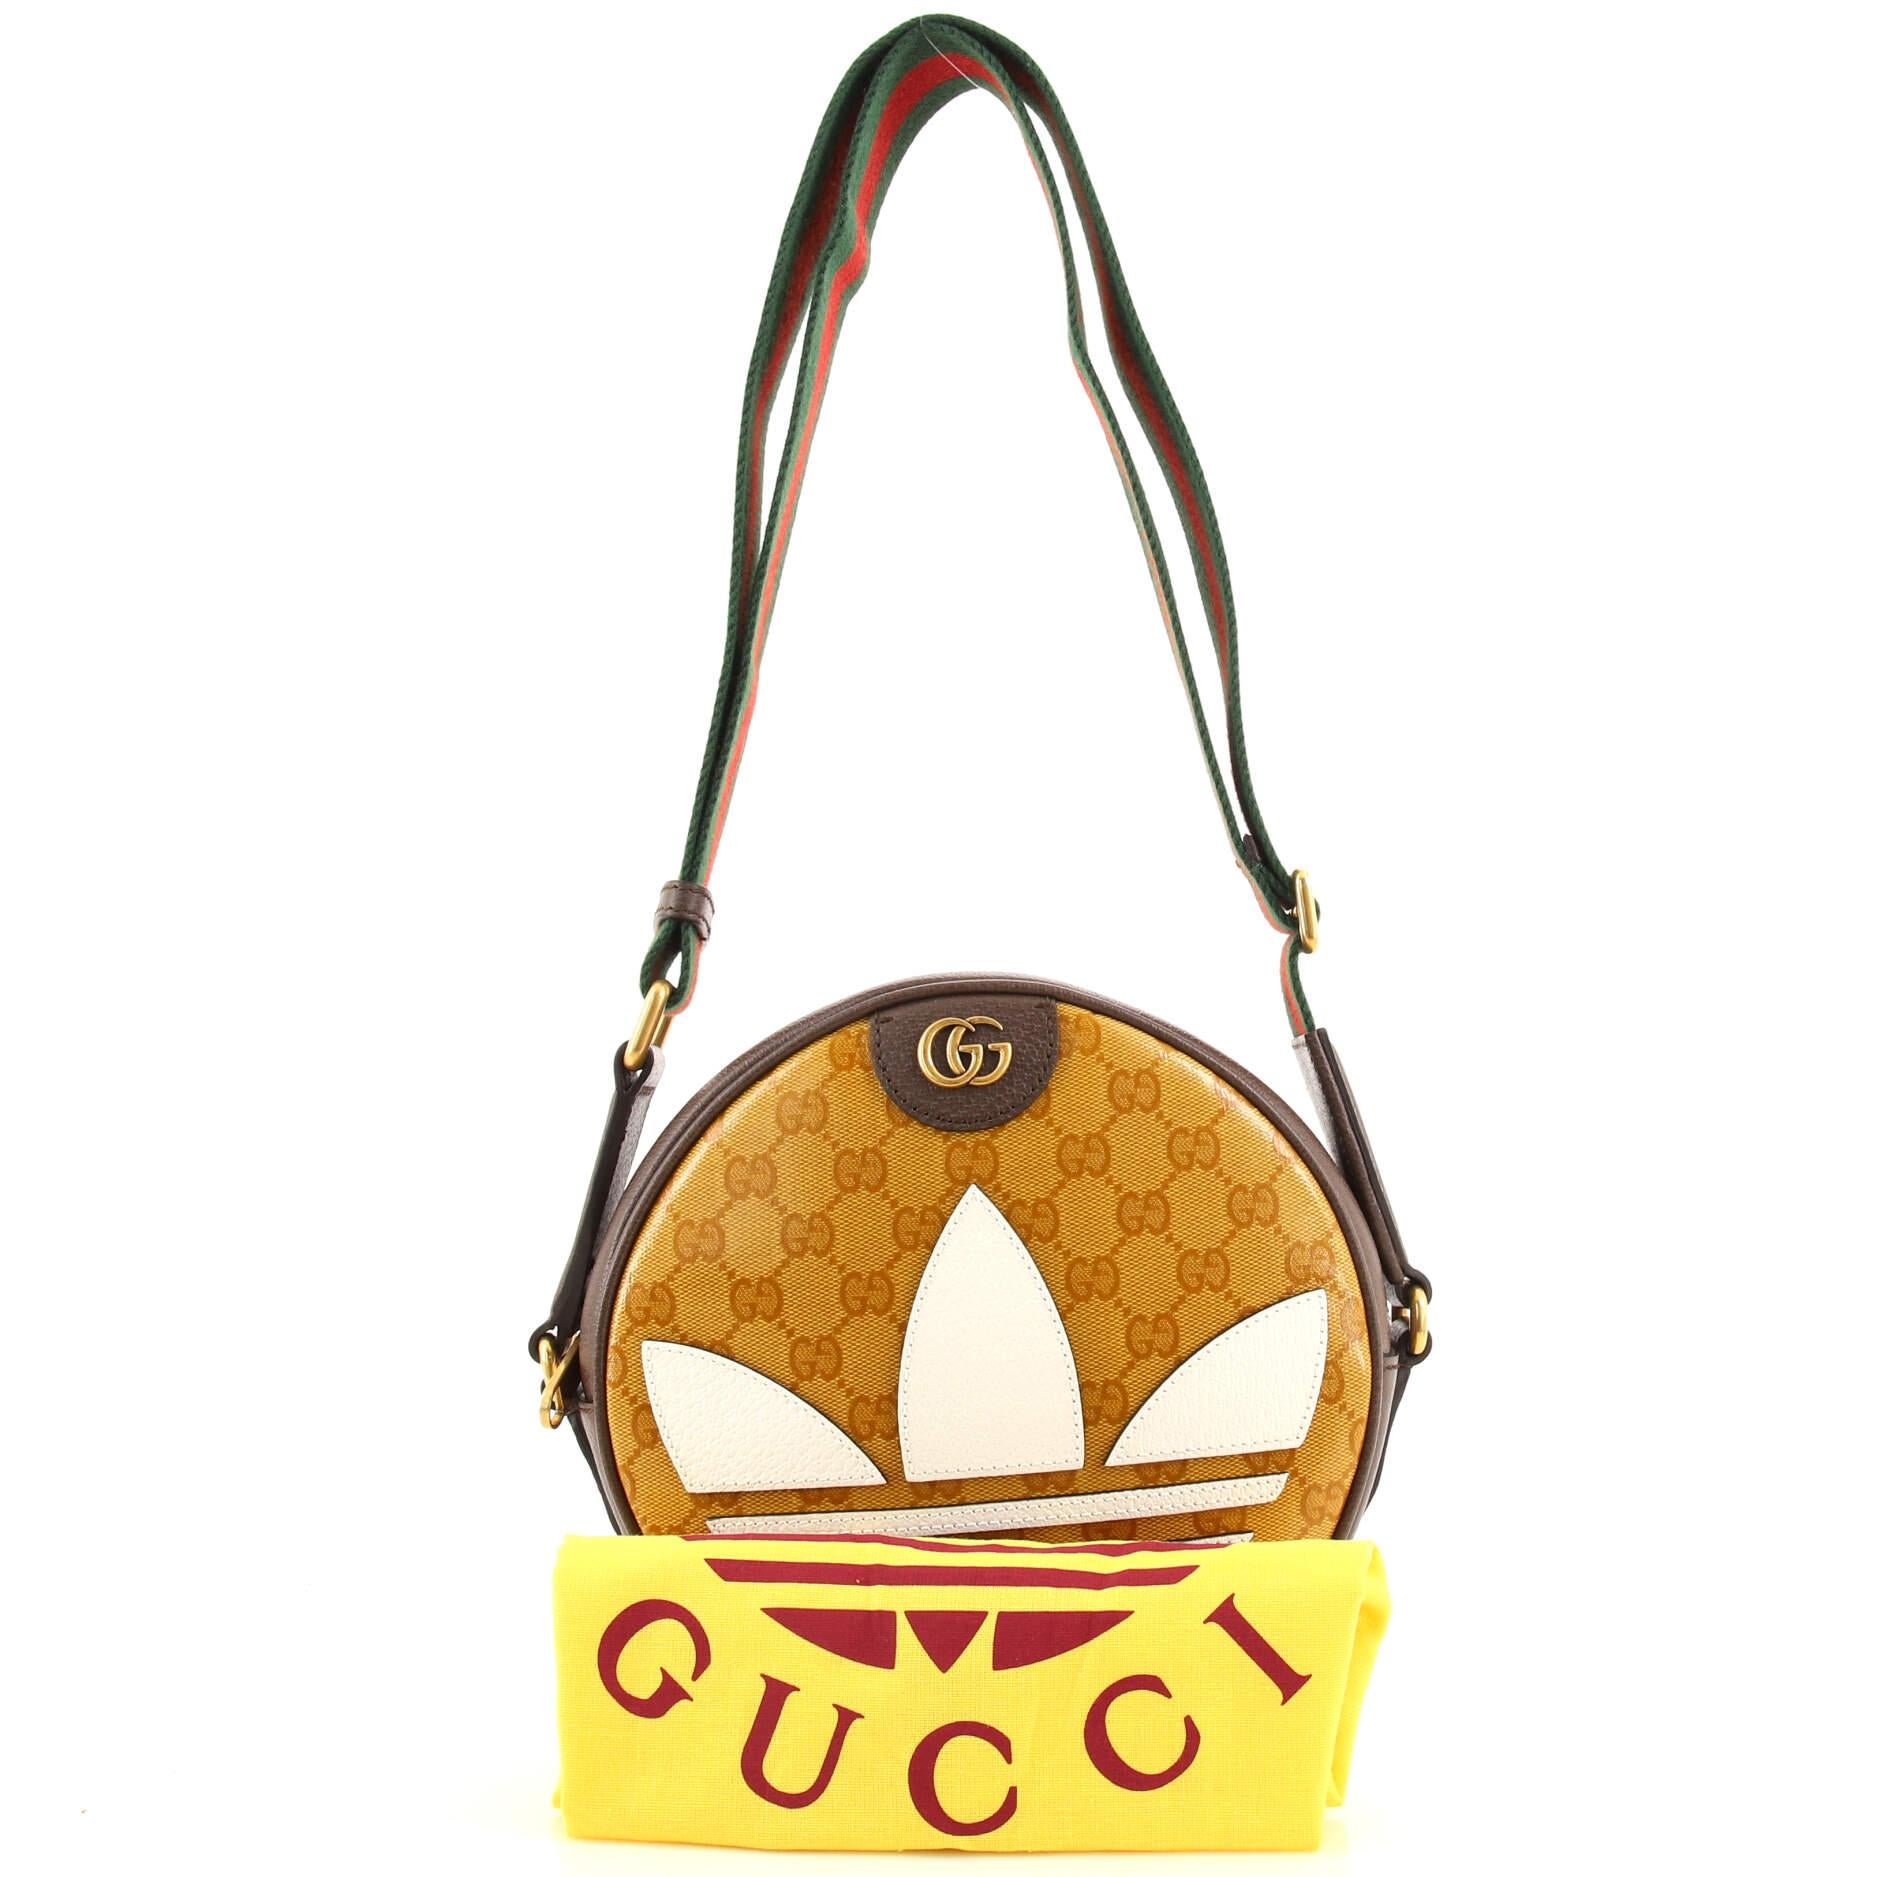 Gucci x Adidas Medium Bowler Bag